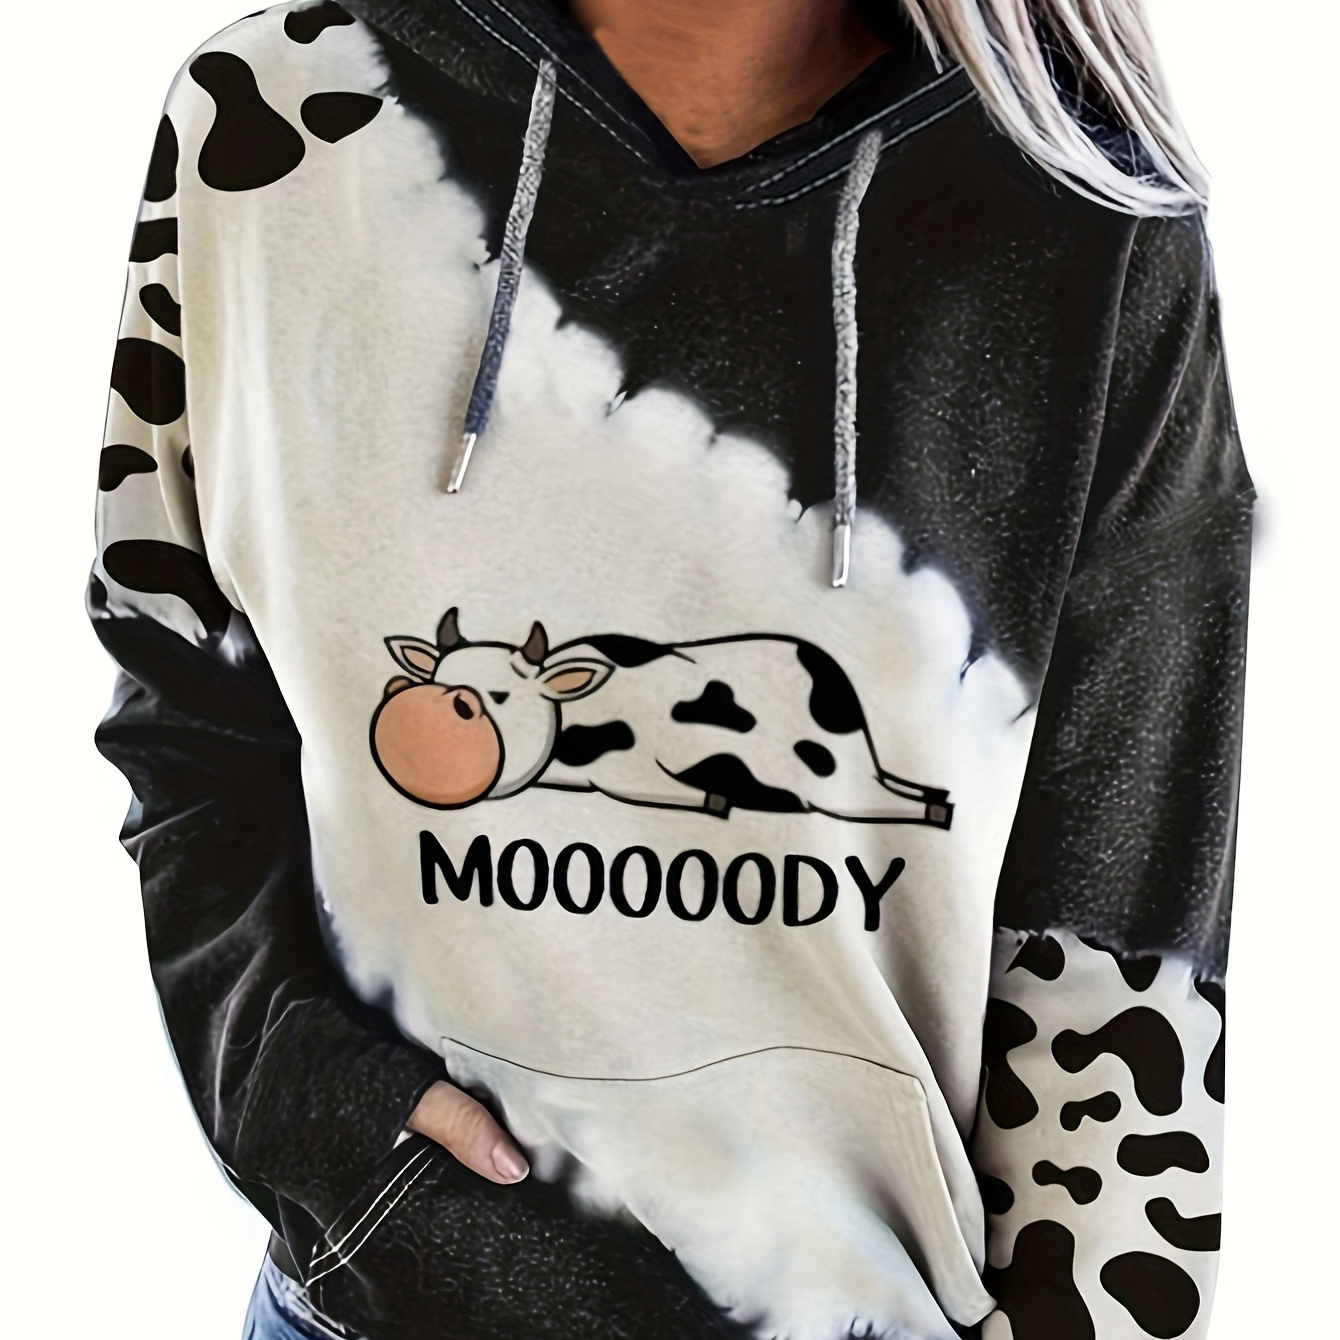 

Cow & Letter Print Hoodies, Casual Drawstring Kangaroo Pocket Sweatshirt, Women's Clothing